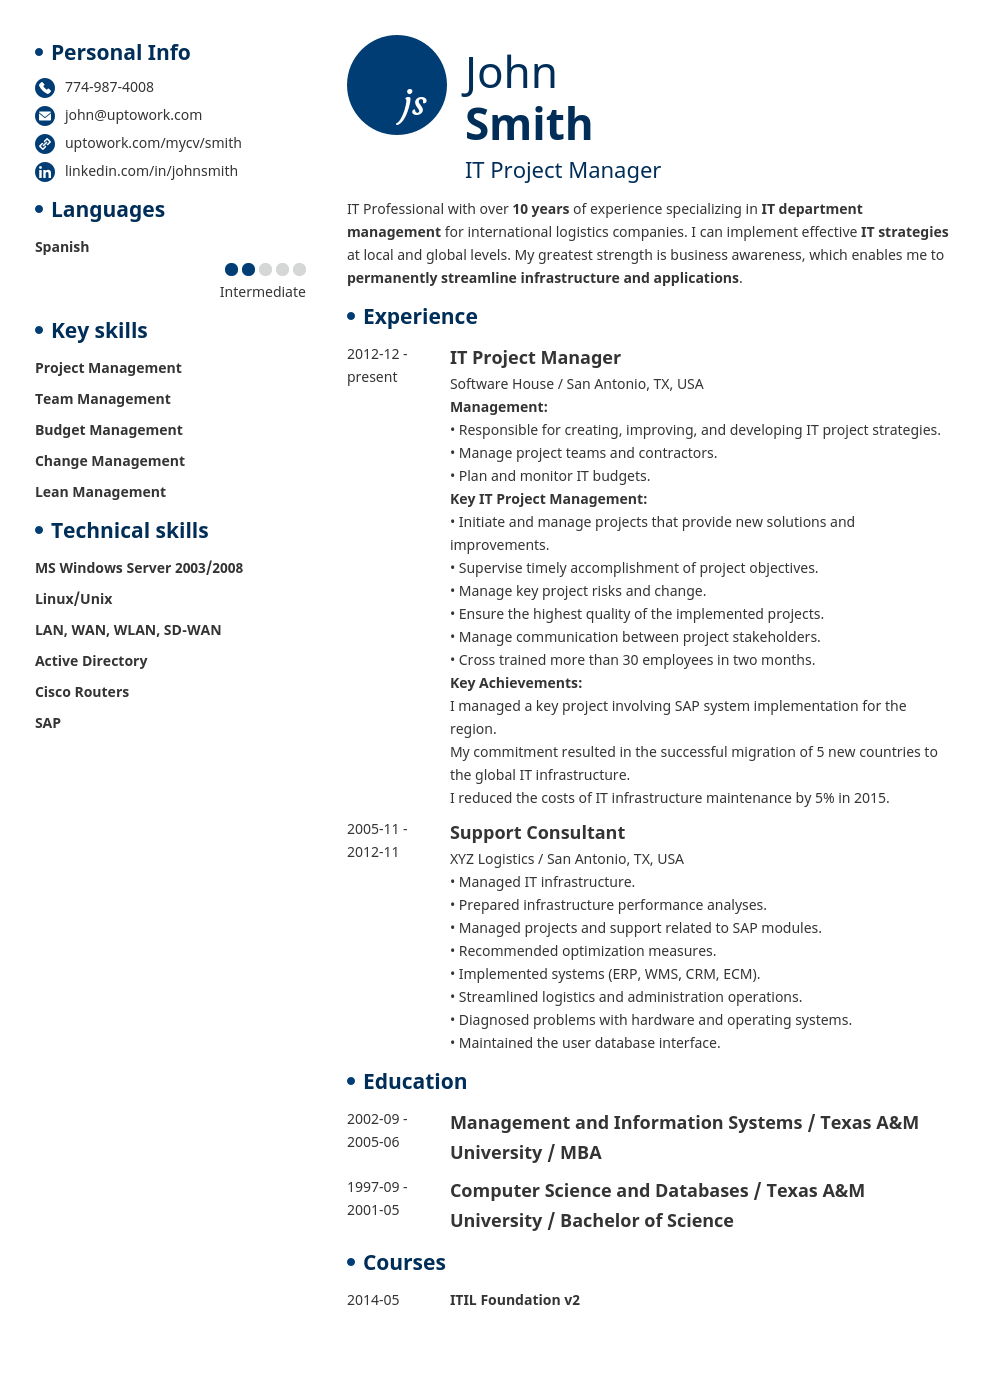 using resume